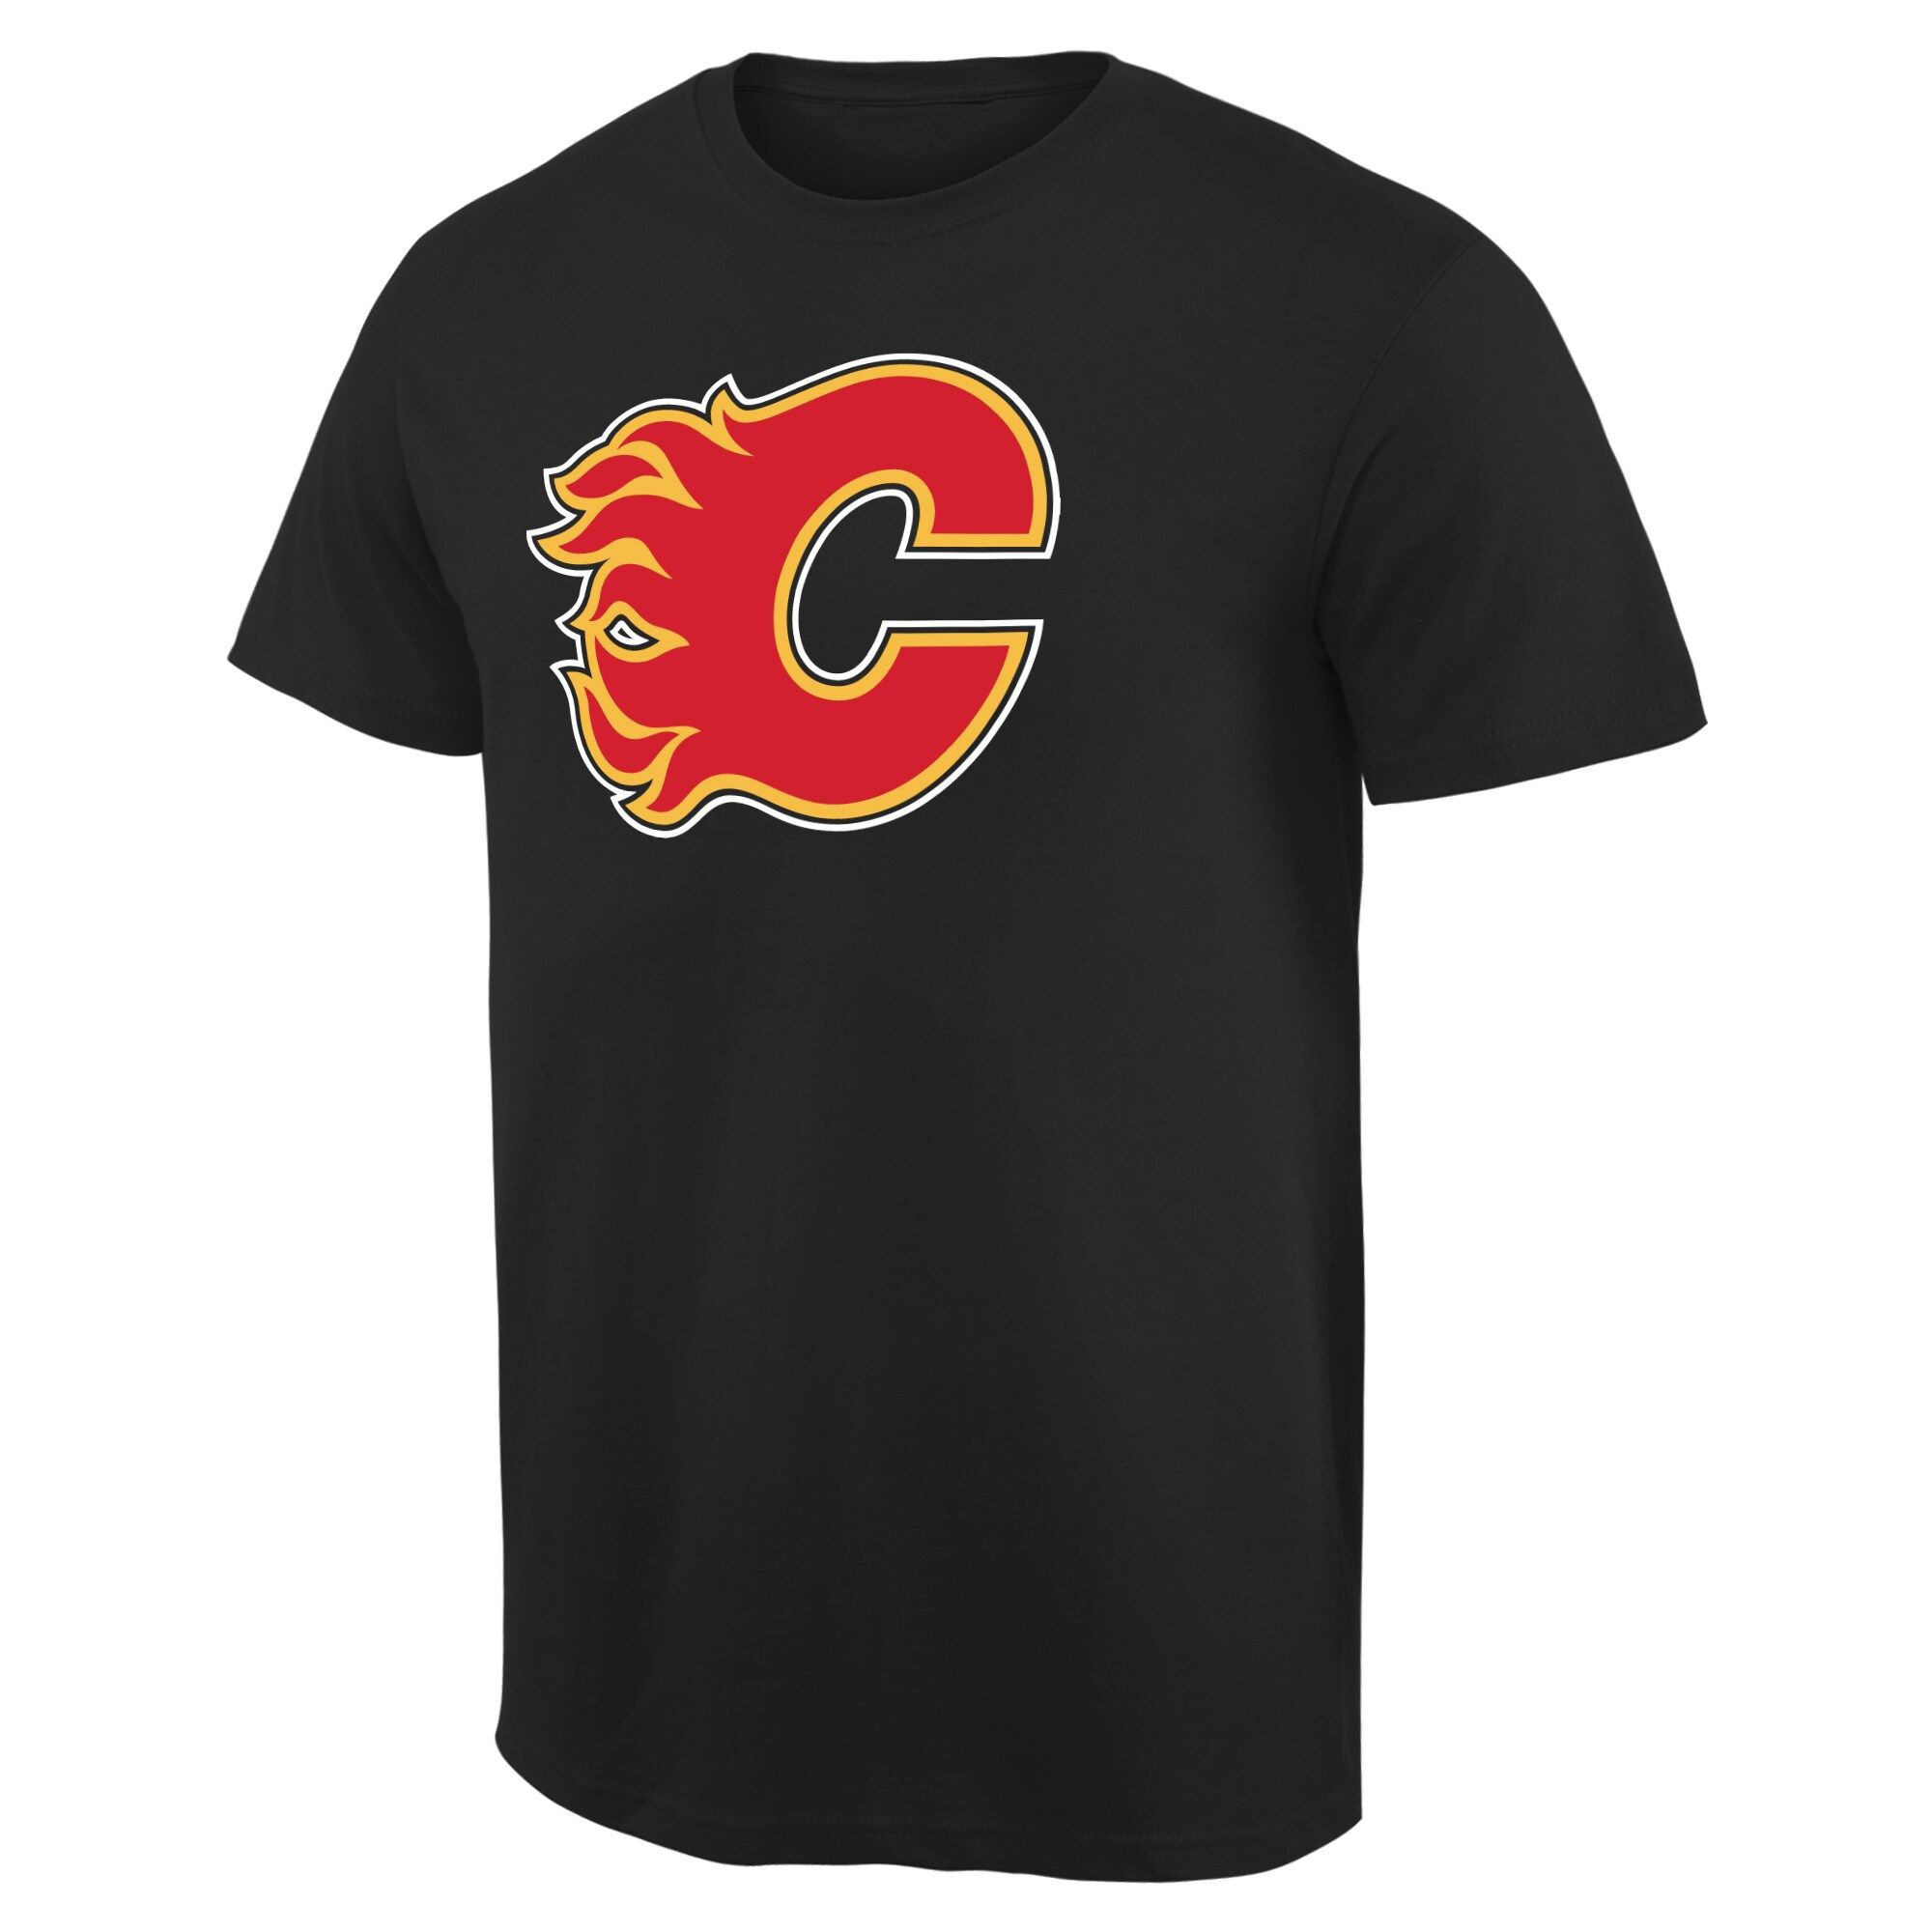 Men's Black Calgary Flames Team Primary Logo T-Shirt